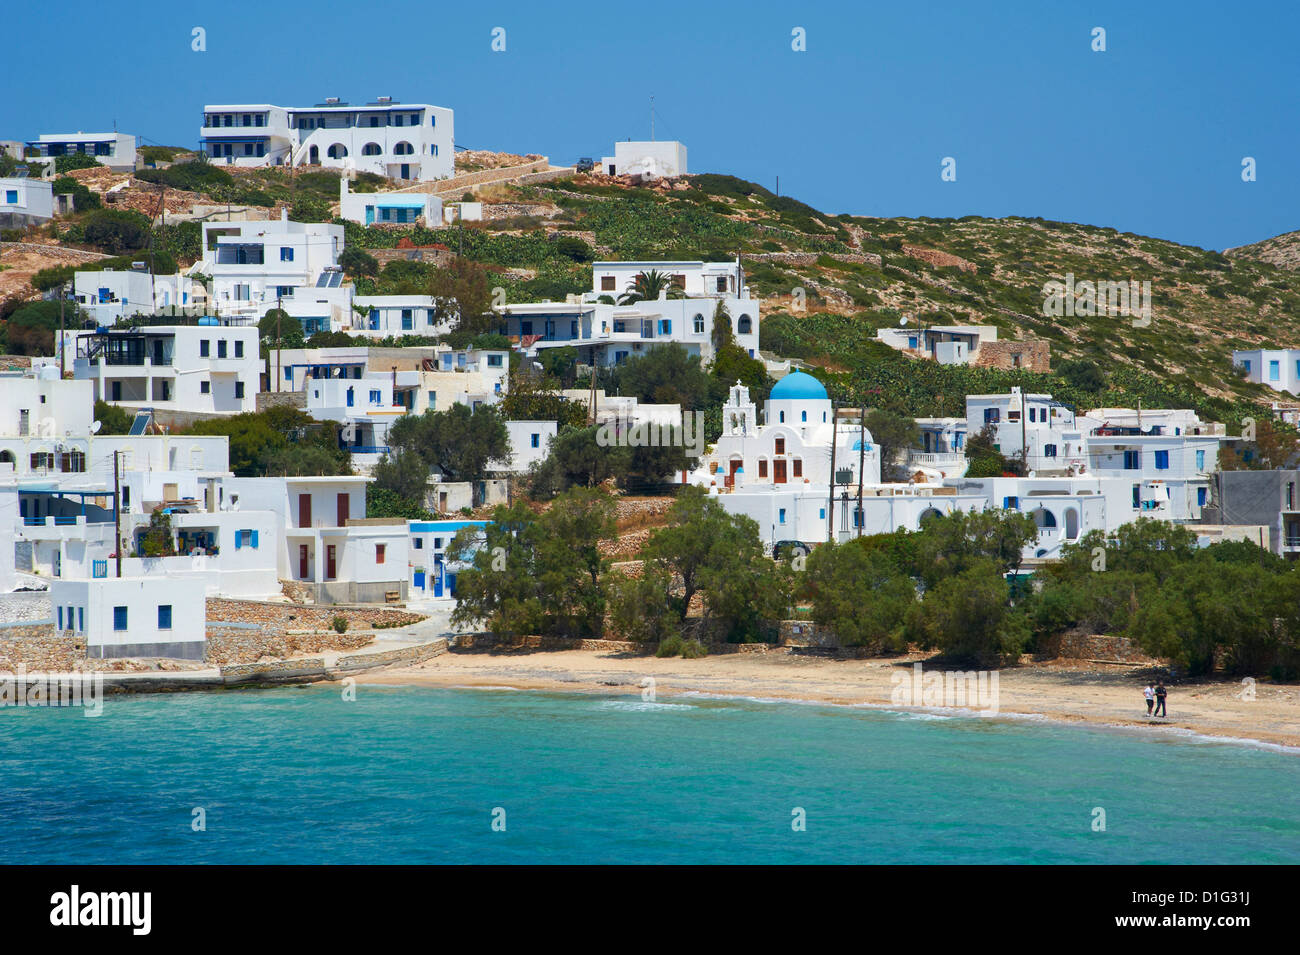 Town, Stavros, Donoussa, Cyclades, Aegean, Greek Islands, Greece, Europe Stock Photo